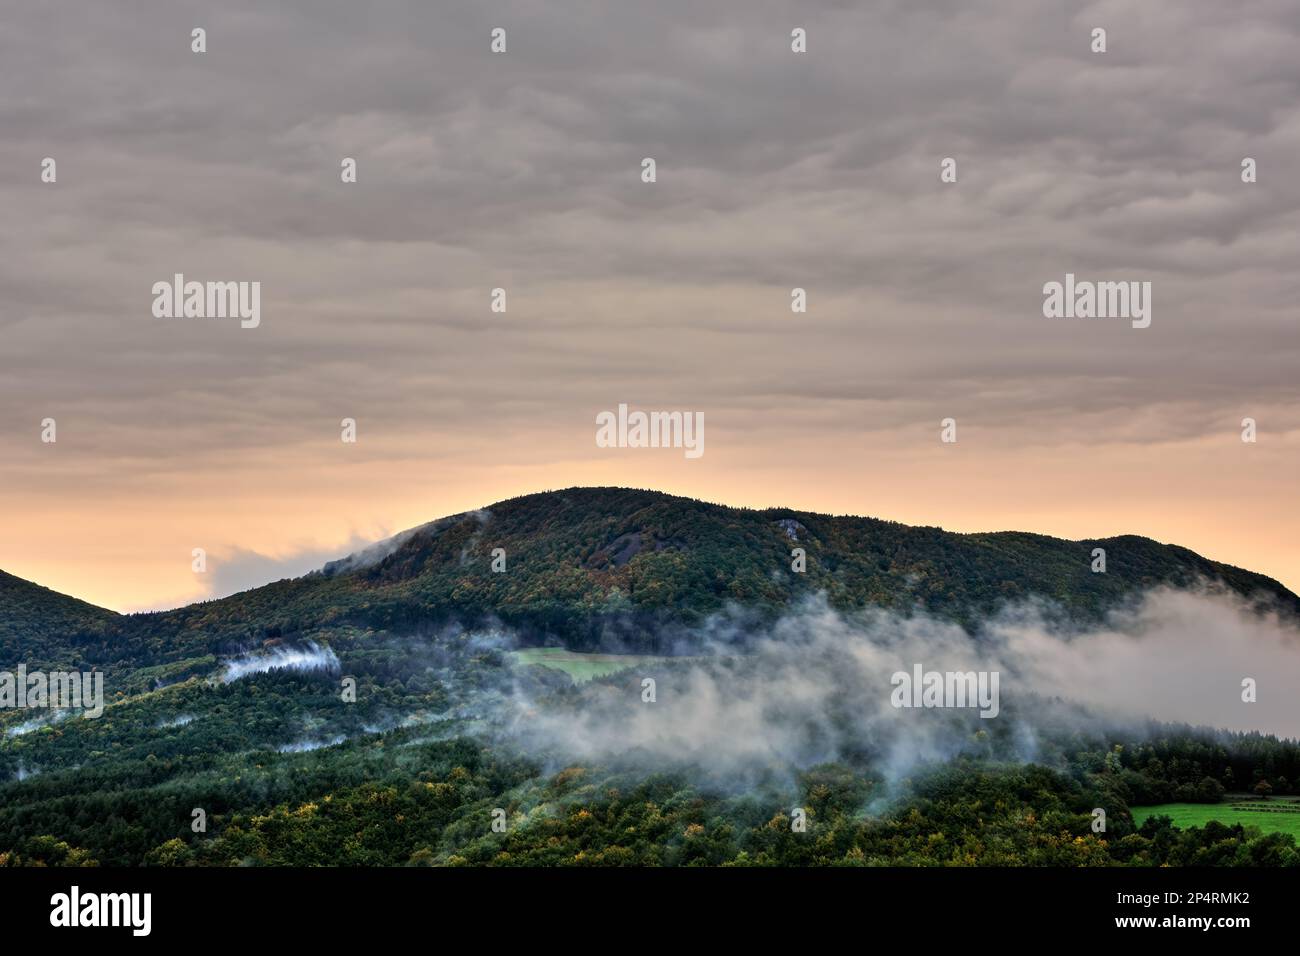 Berg mit Wald bei Sonnenaufgang, wunderschöner bunter Himmel. Neblige Landschaft. Spätherbst. Homolka, Slowakei. Stockfoto